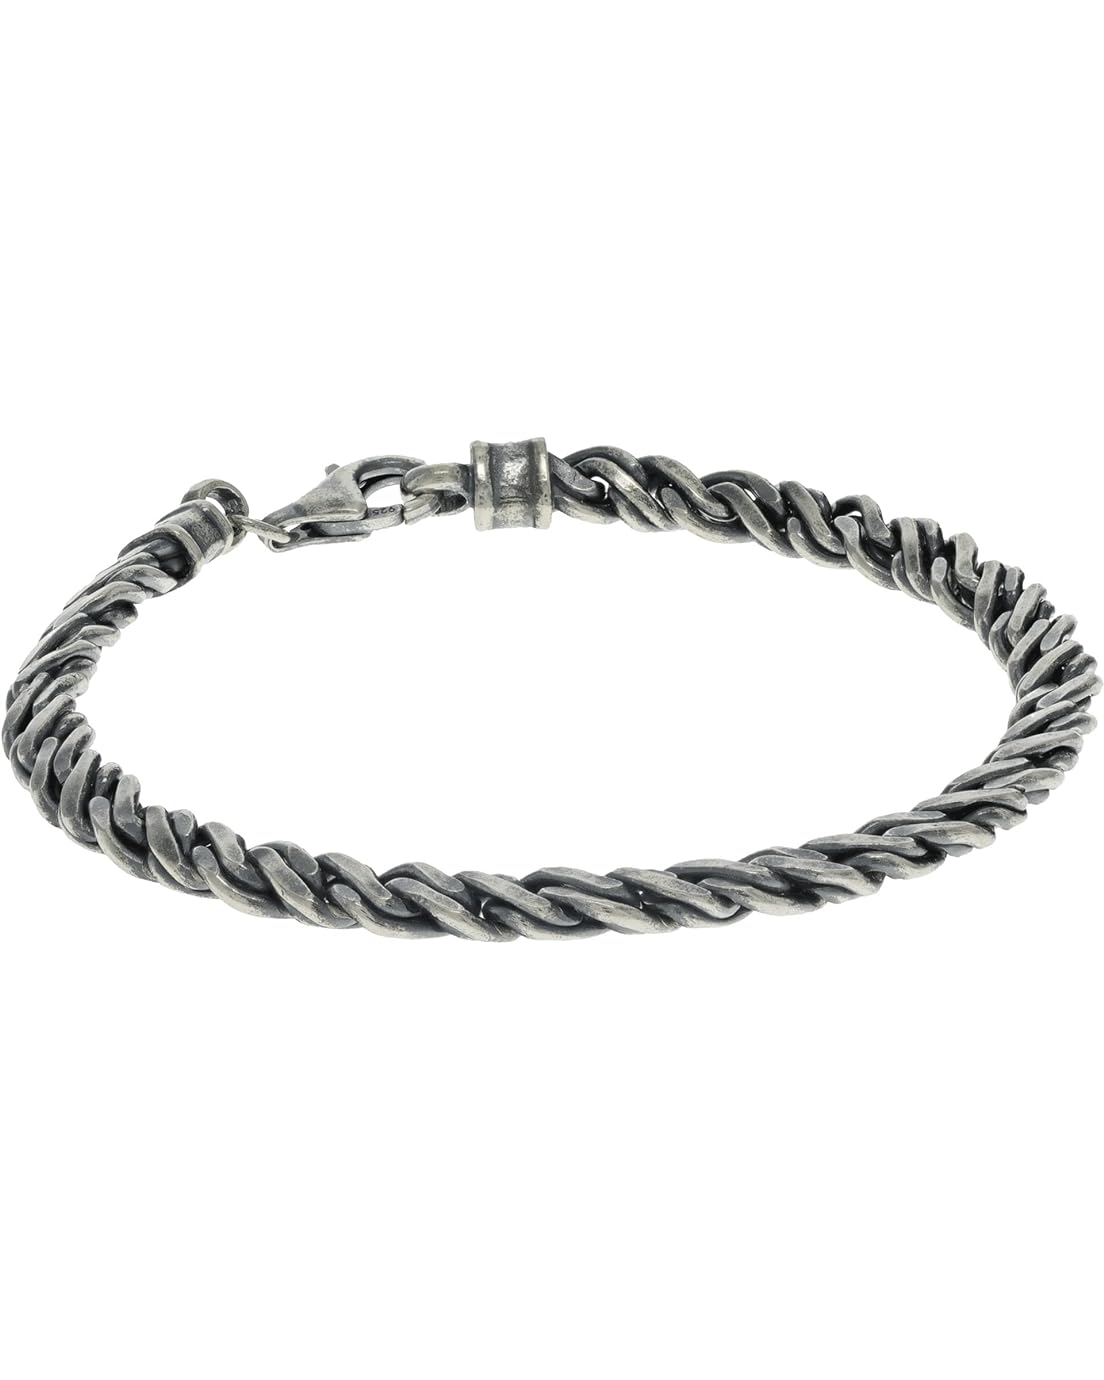 Kendra Scott Beck Rope Chain Bracelet